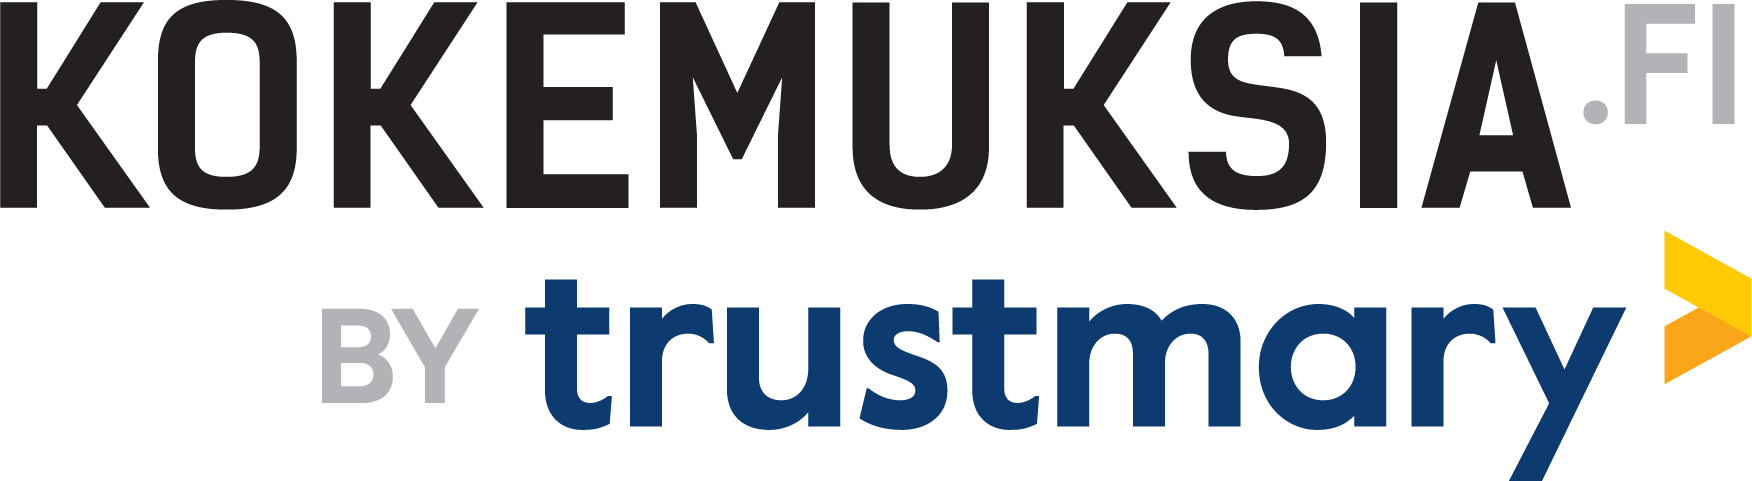 Kokemuksia.fi by Trustmary logo